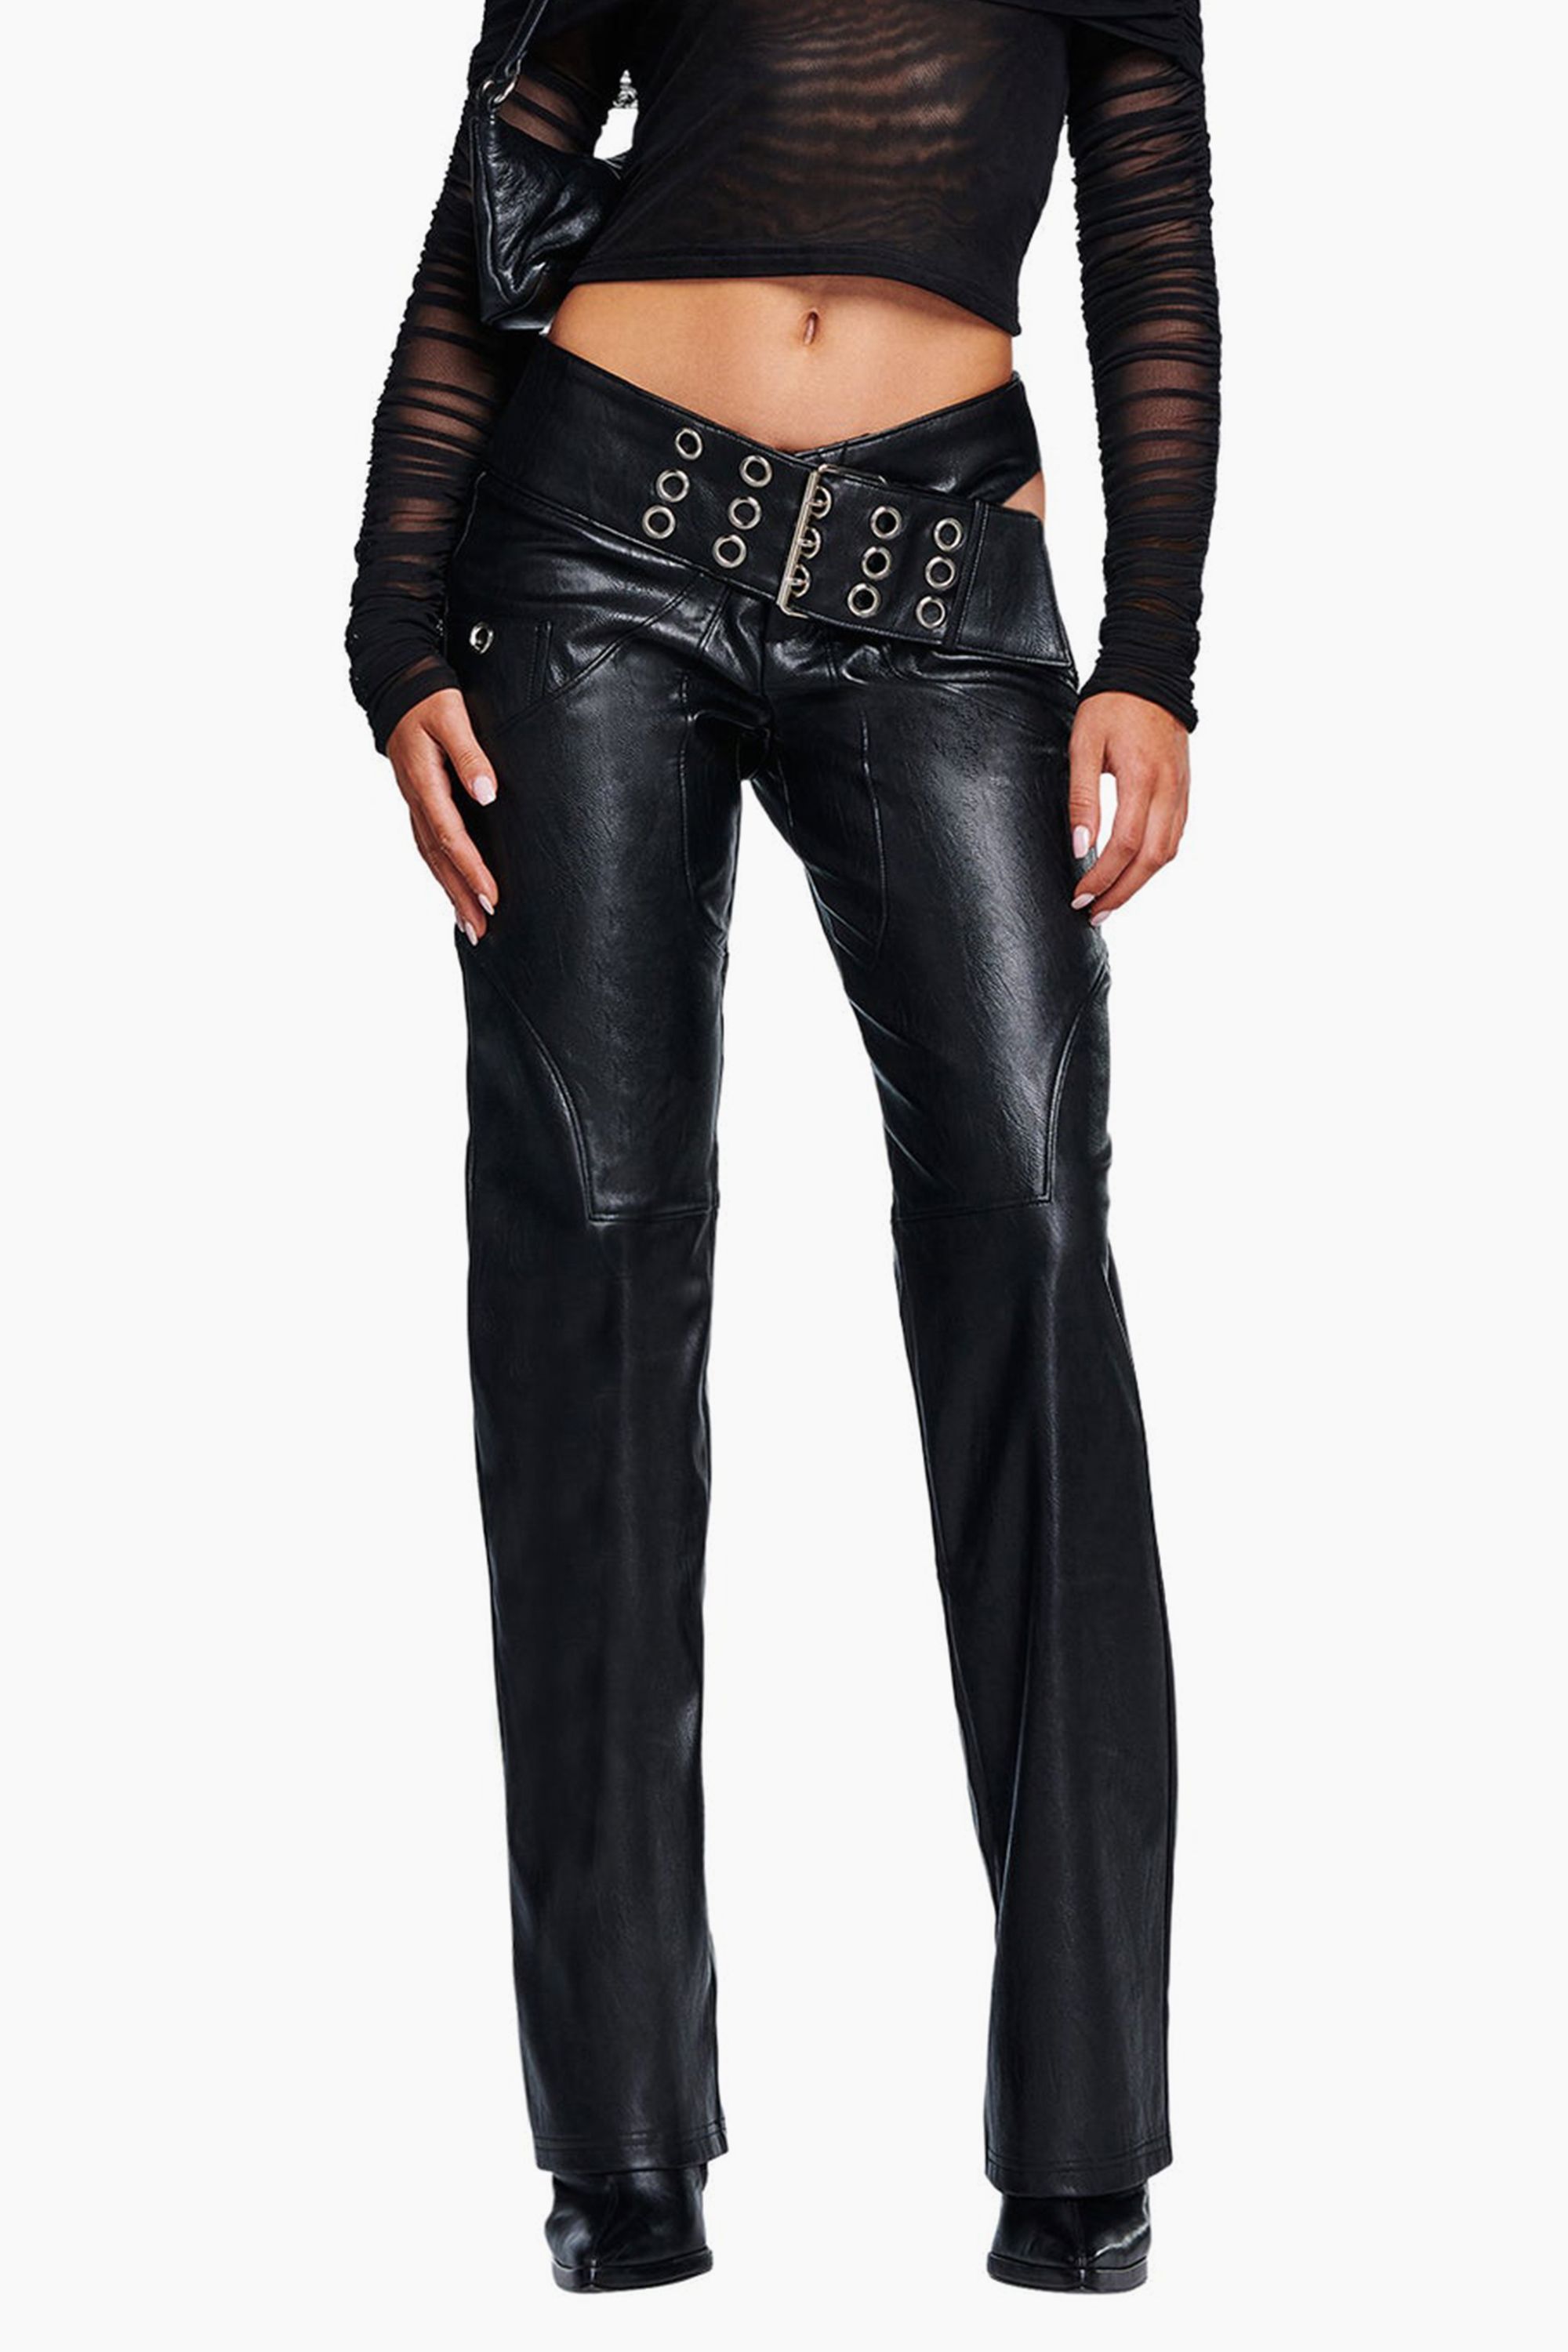 Kaylee Faux Leather Pants Ash Brown Soaked In Luxury  Product  Sienna  Goodies